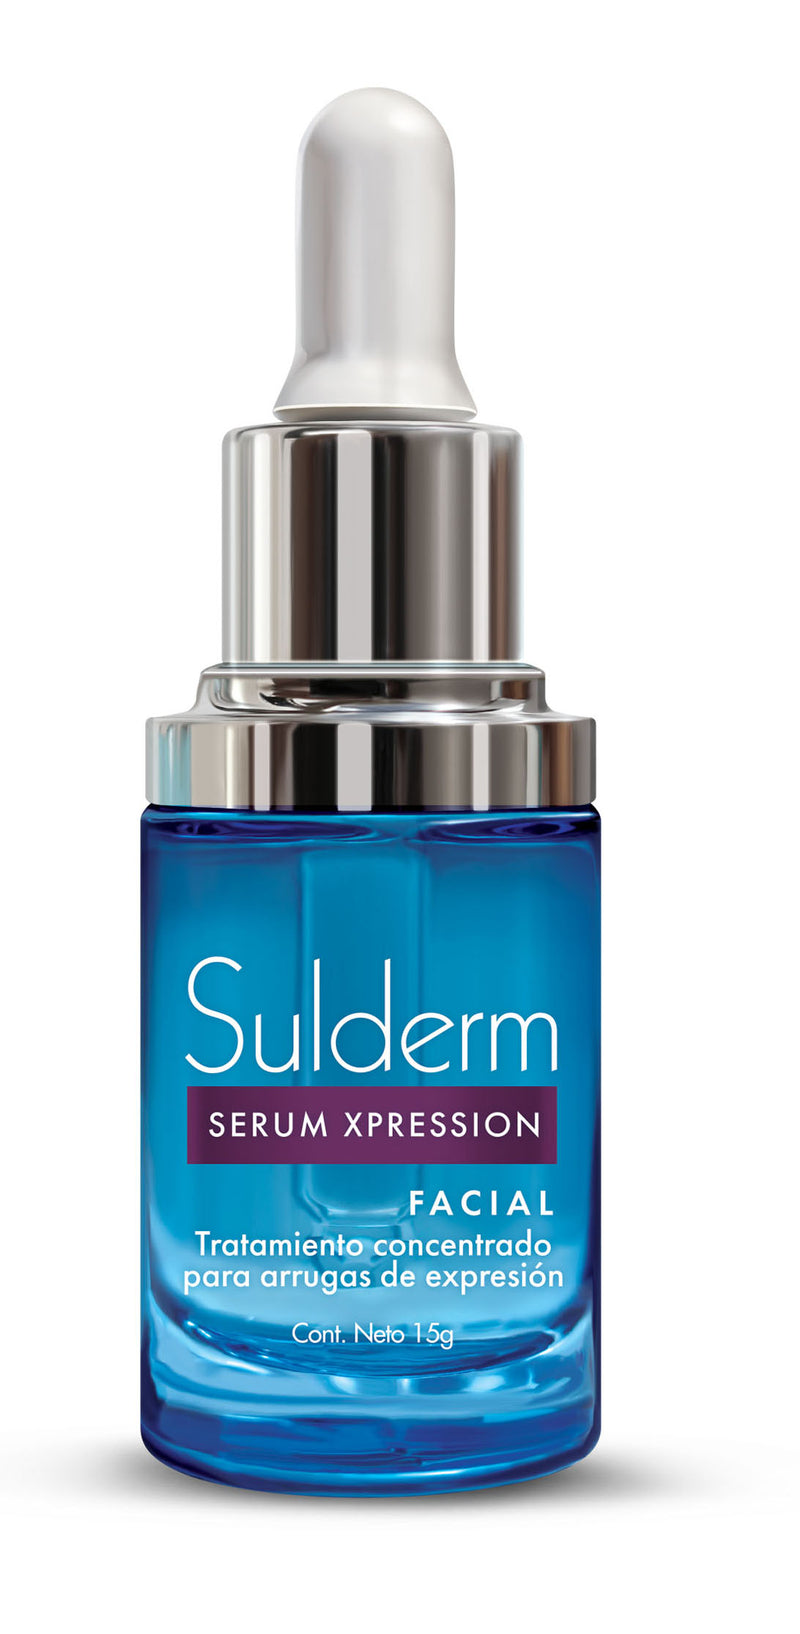 Serum Xpression Sulderm